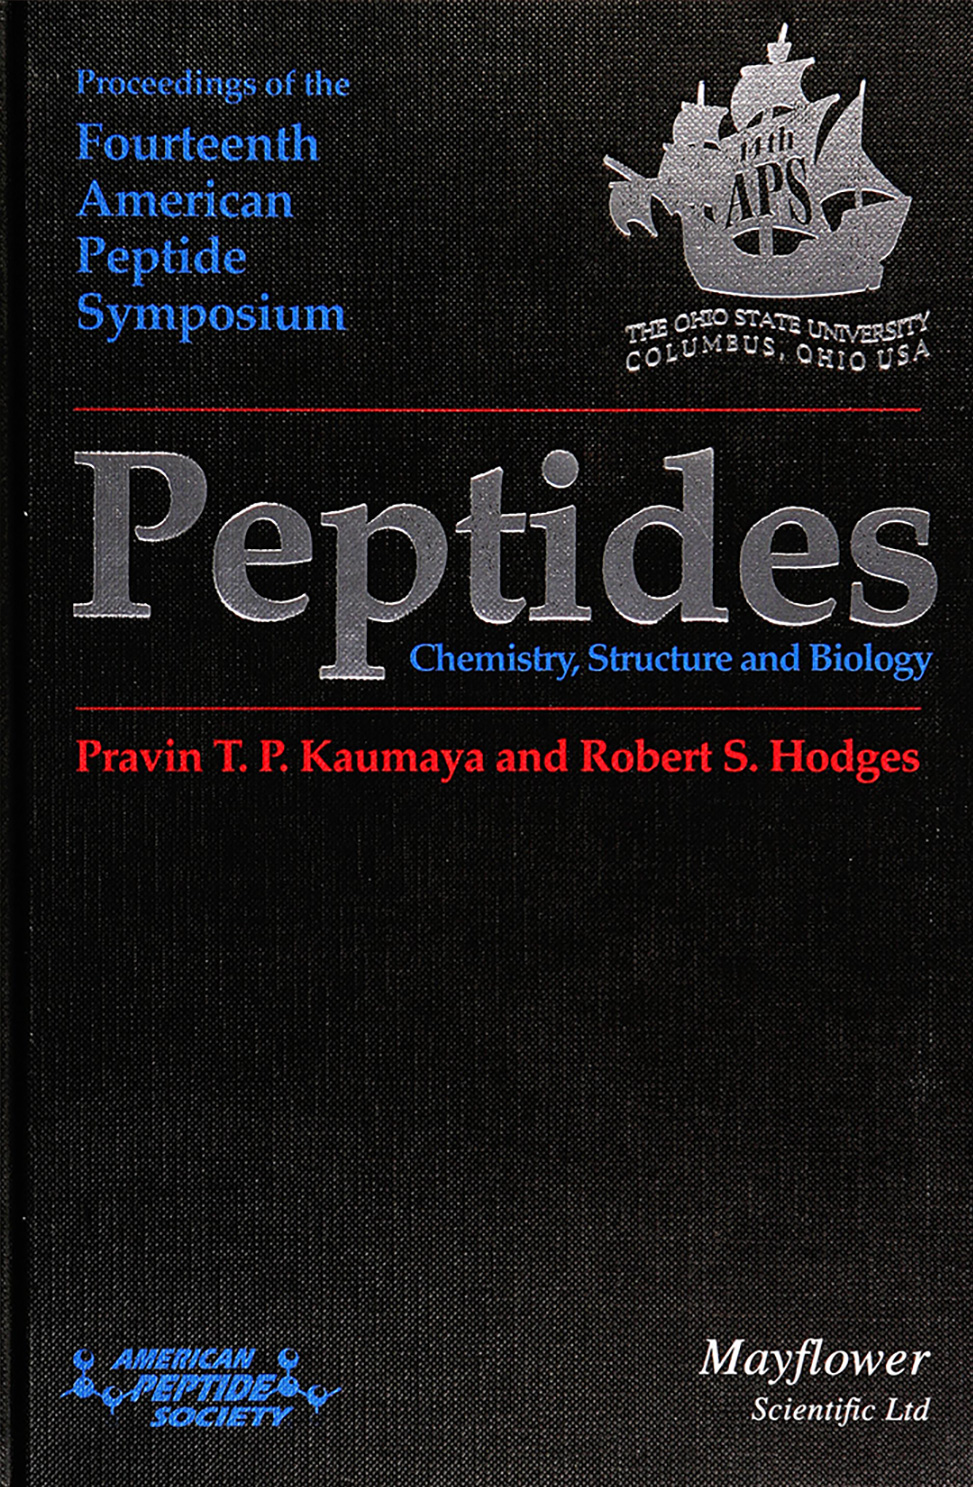 1995 Proceedings Cover